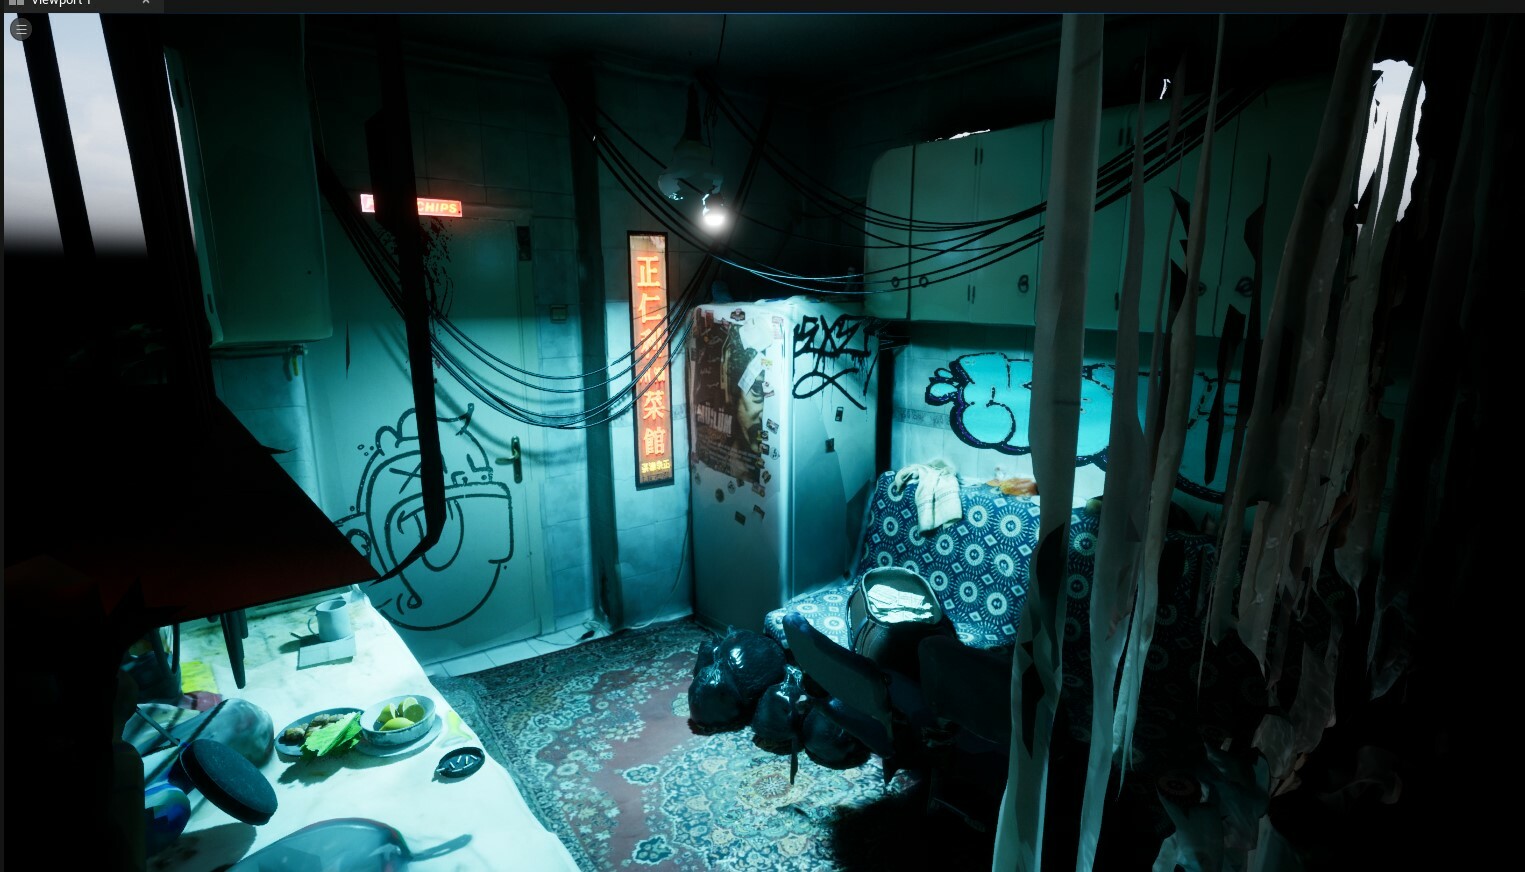 ArtStation - Gamer Room: Cyberpunk